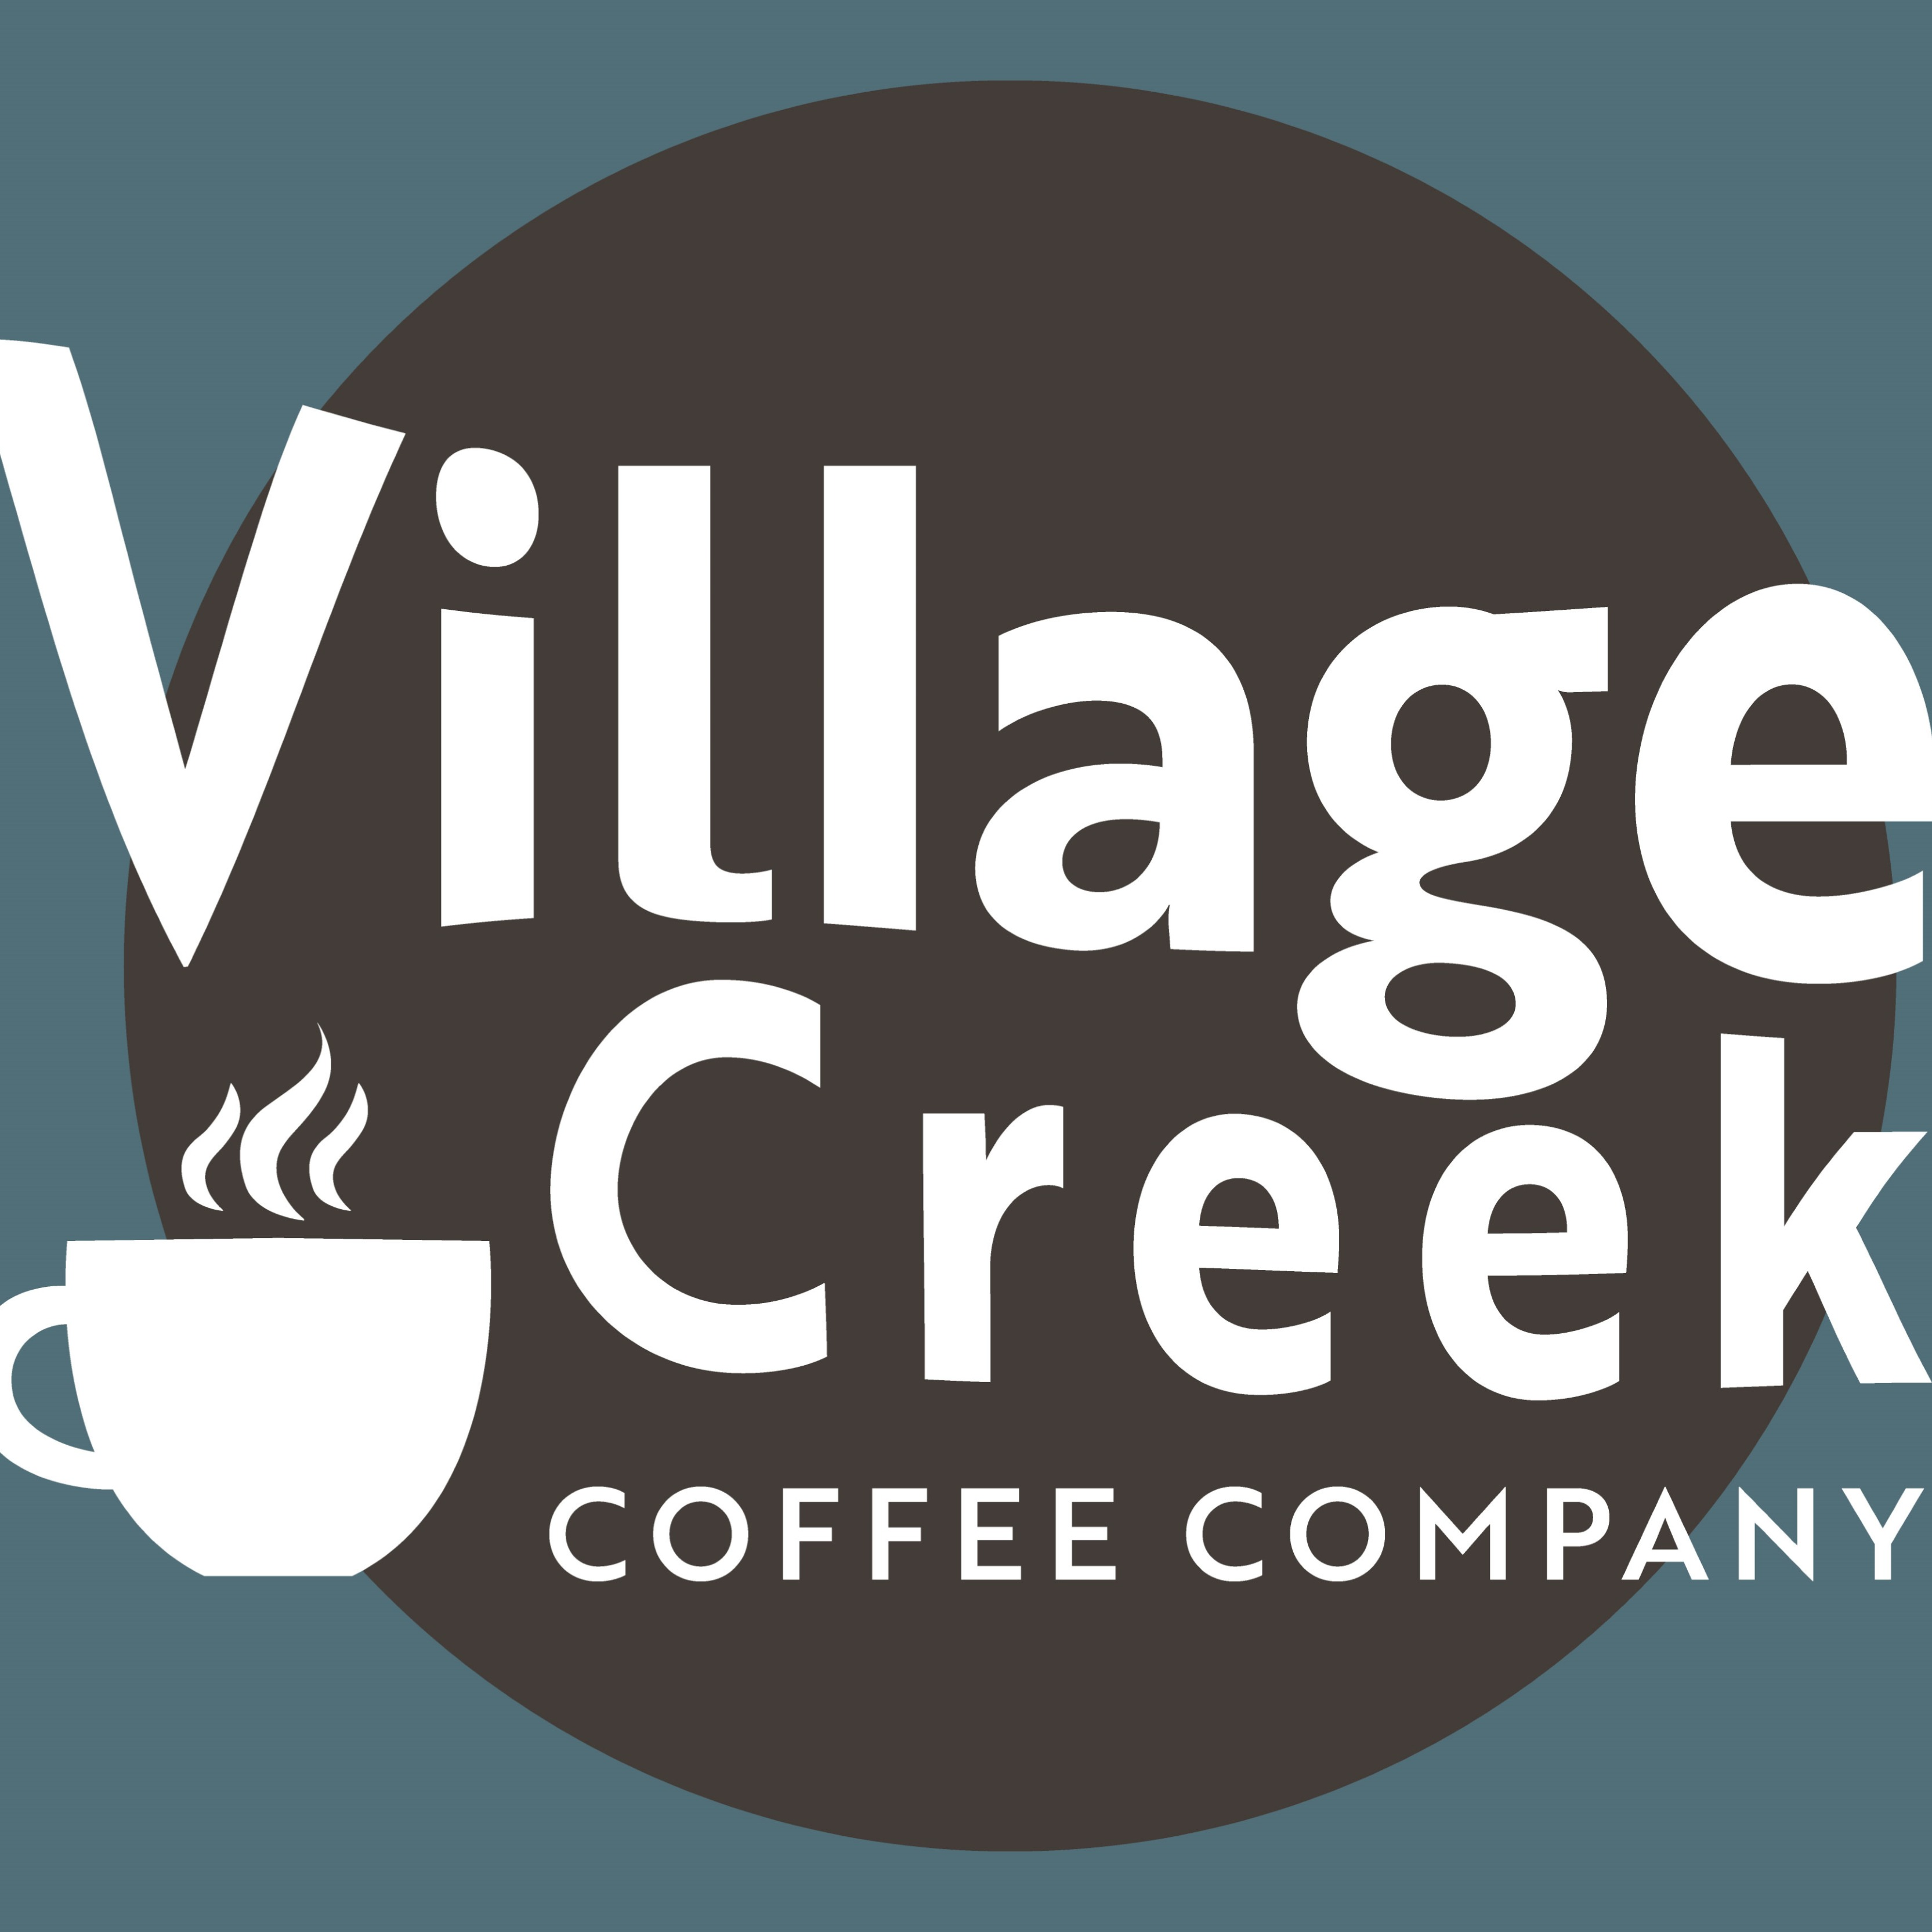 Village Creek Coffee Company